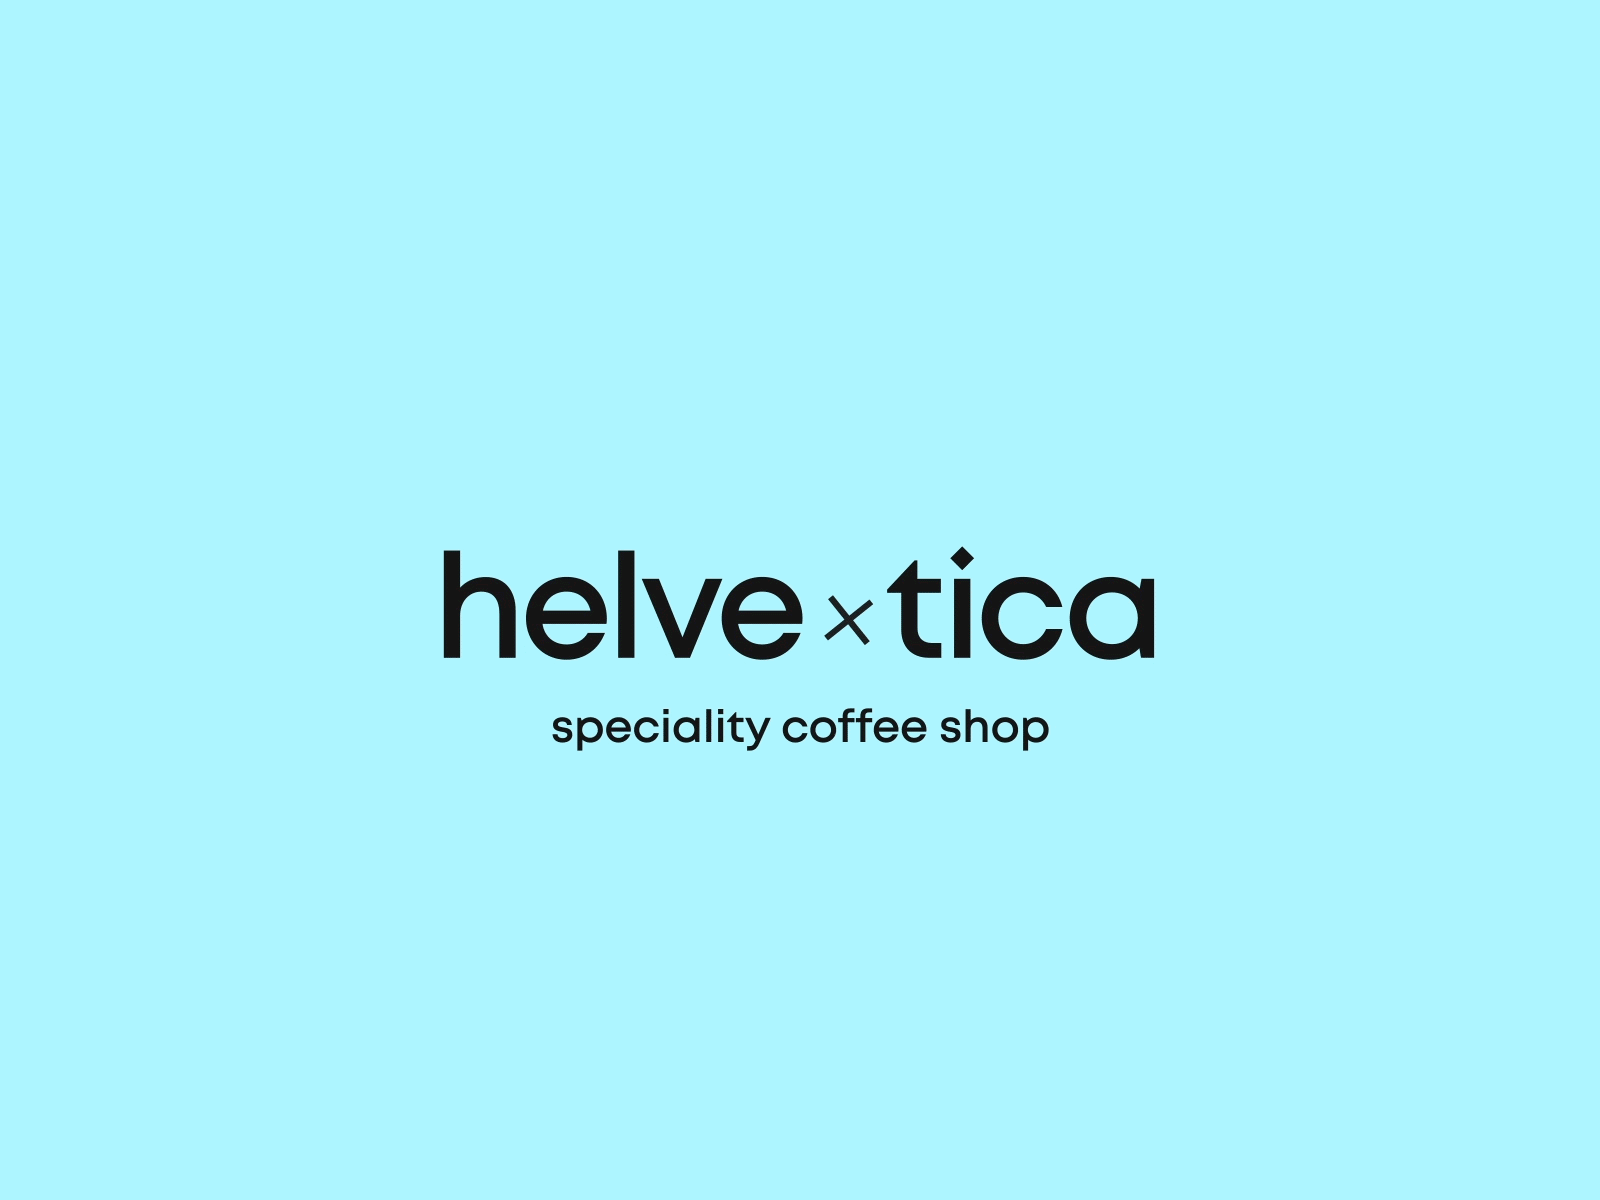 Helvetica Speciality Coffee Brand